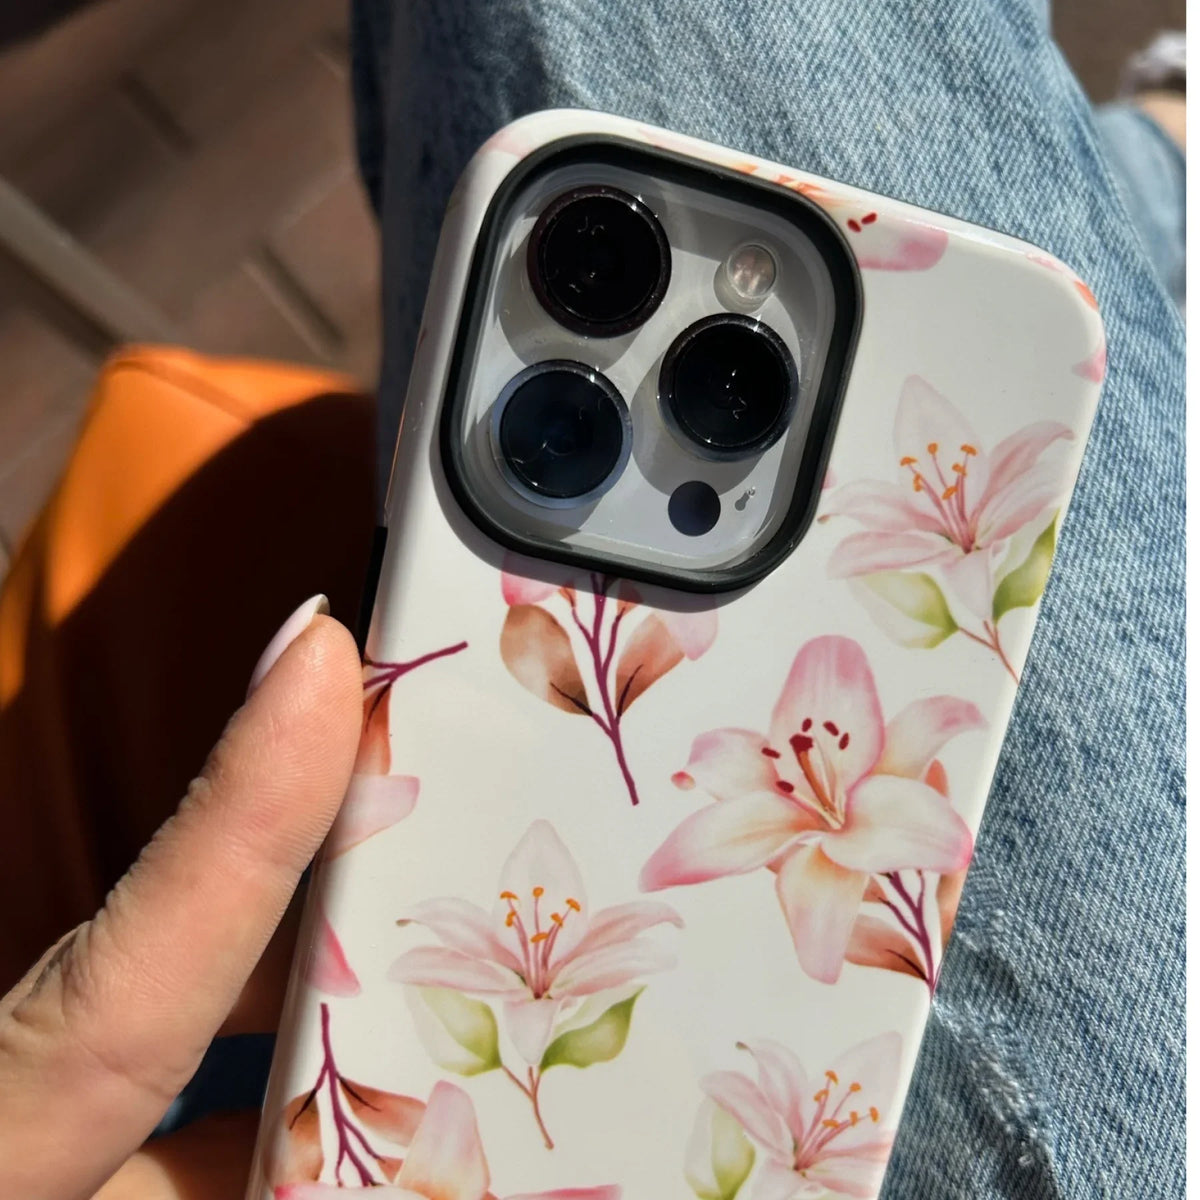 Lily Garden iPhone Case - iPhone 12 Mini